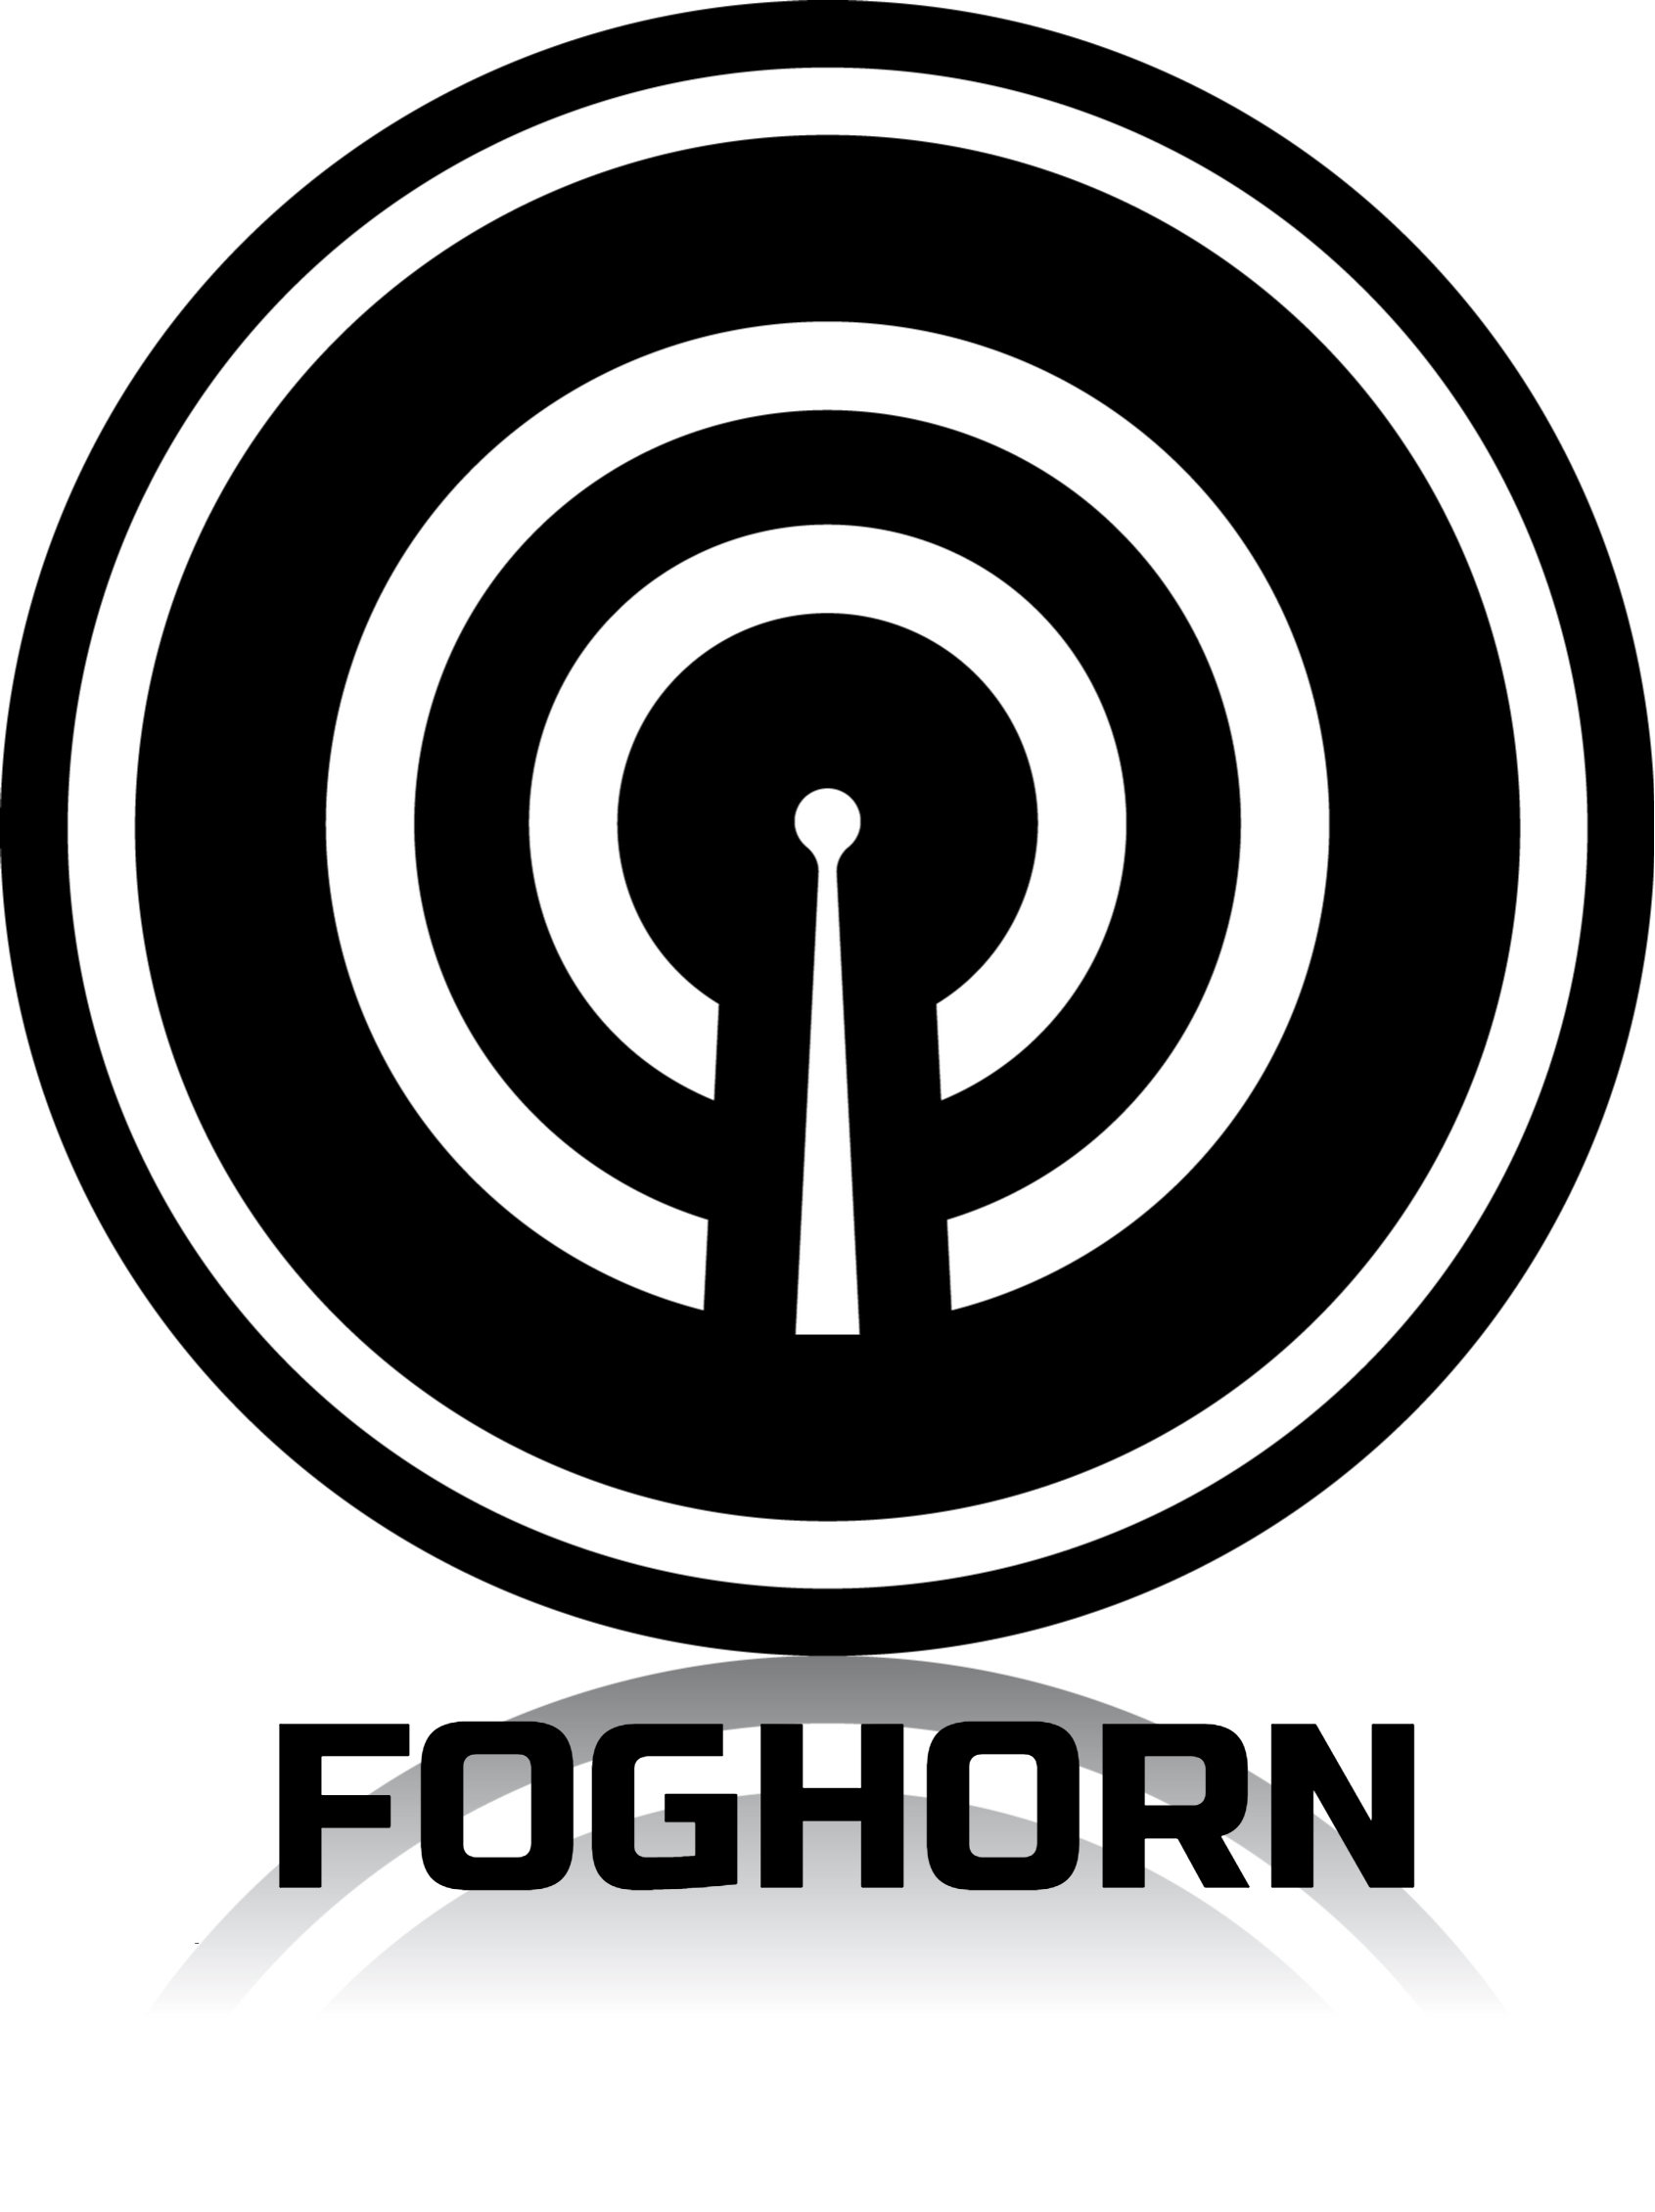 The Foghorn Company